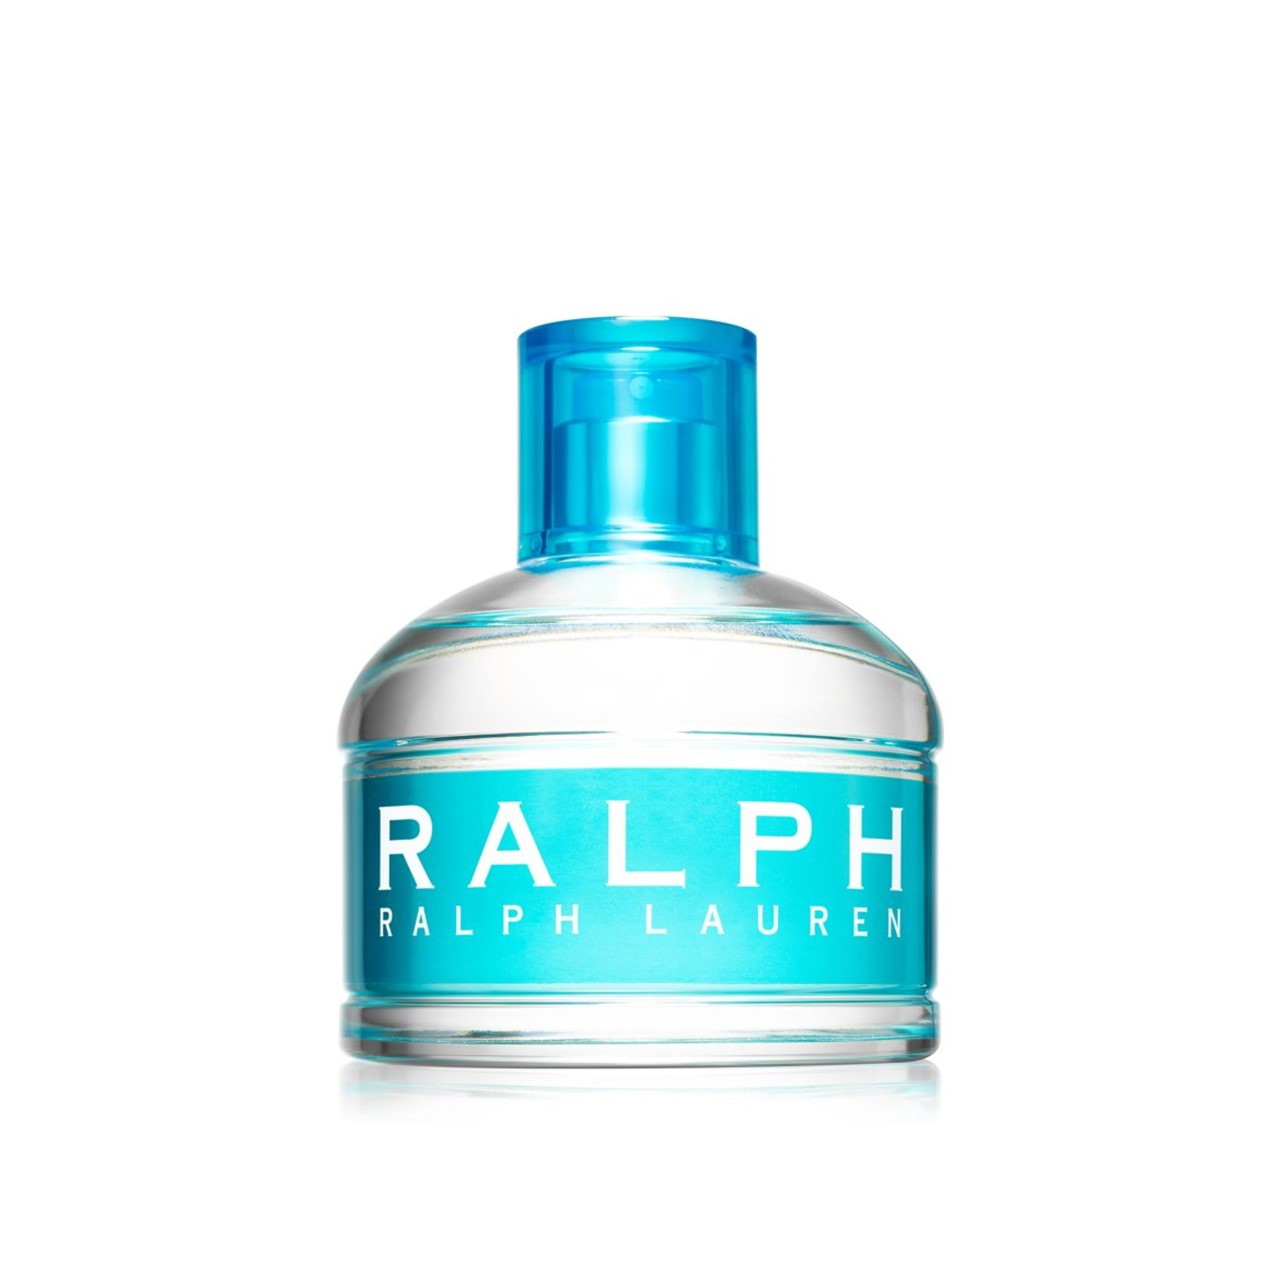 Comprar Perfume Feminino Woman by Ralph Lauren - 100ml - Eau de